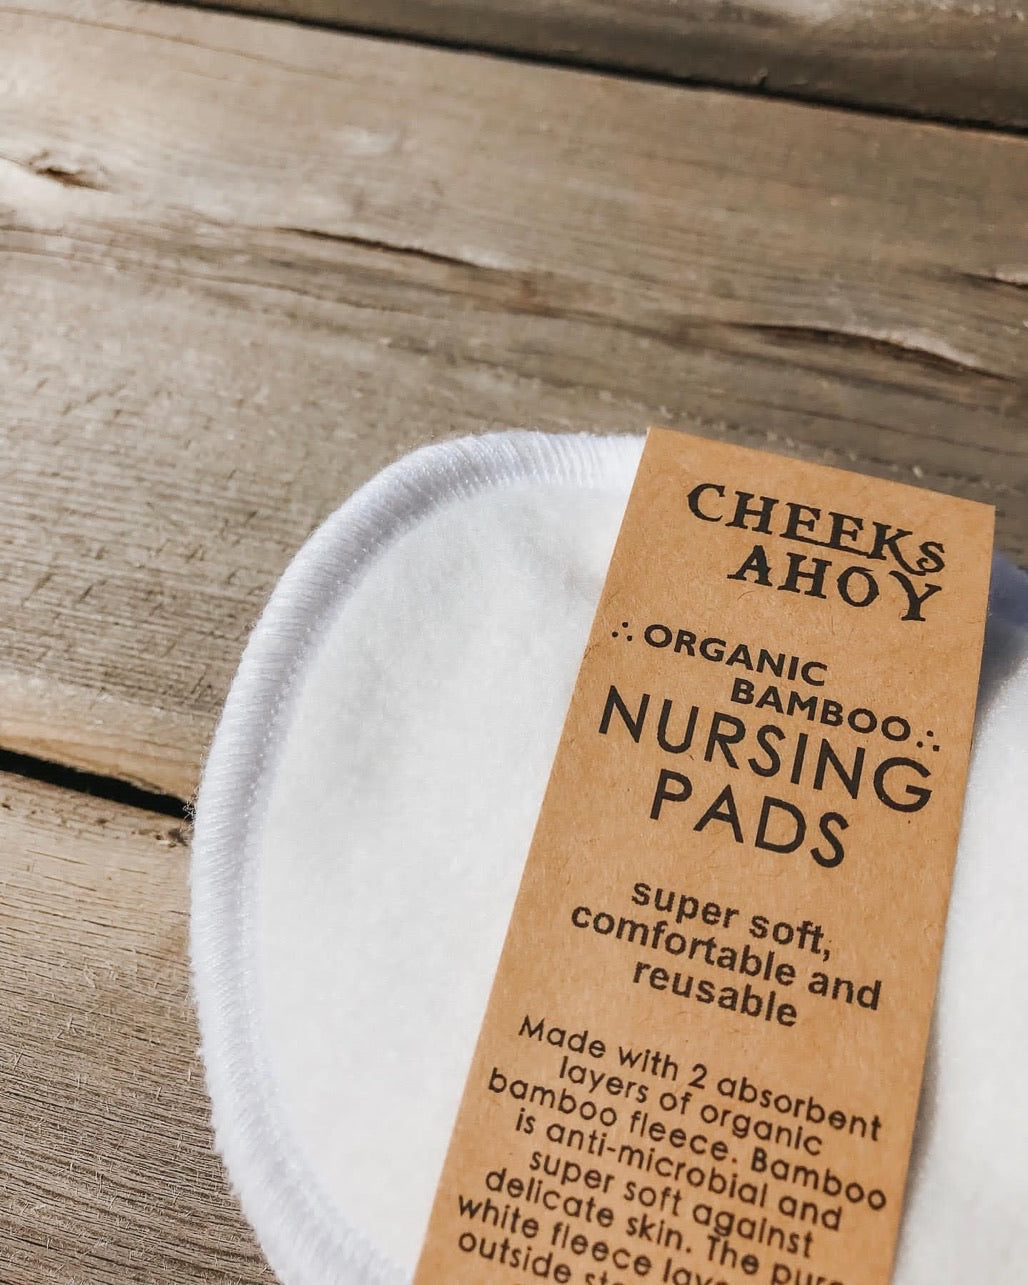 Reusable Nursing Pads (Regular or Organic Bamboo) by Cheeks Ahoy